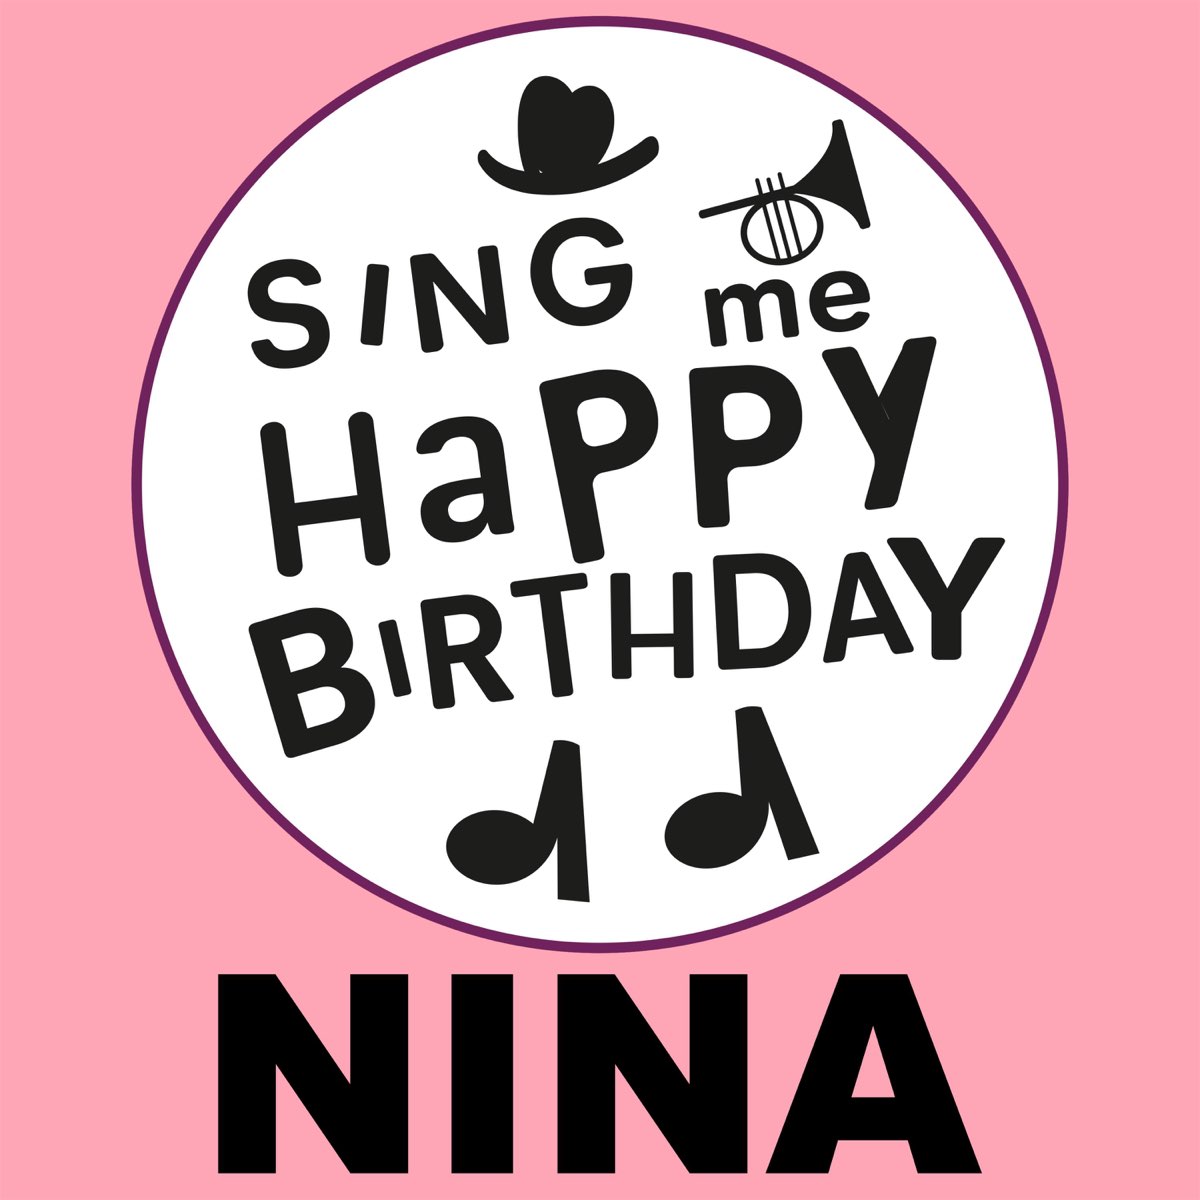 ‎Happy Birthday Nina, Vol. 1 - EP by Sing Me Happy Birthday on Apple Music